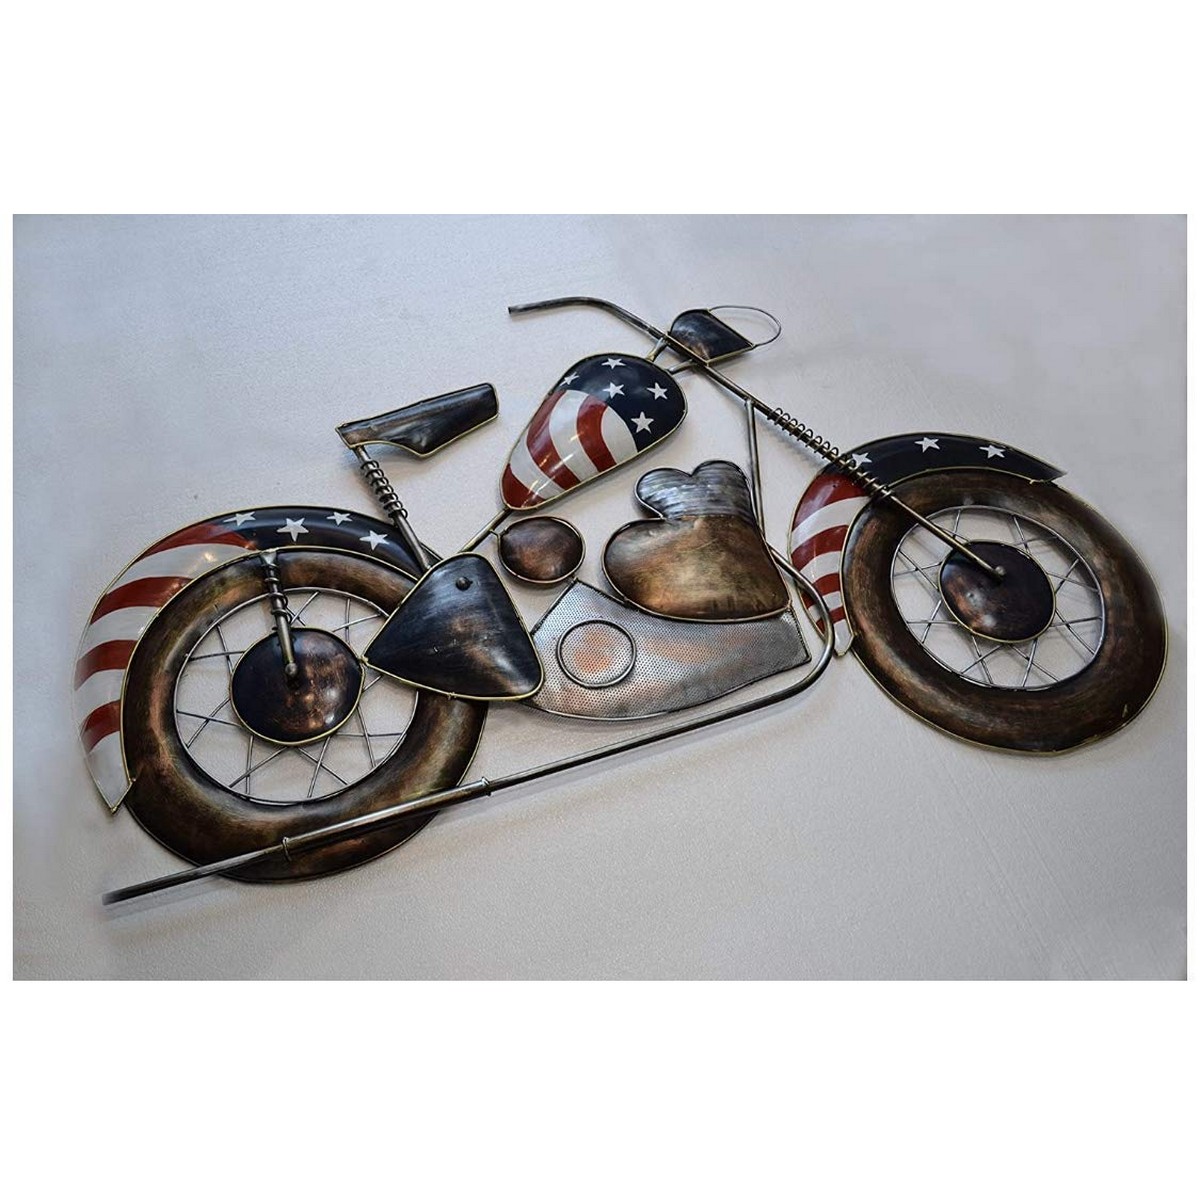 Antique US Bike Decorative for Wall Decor  